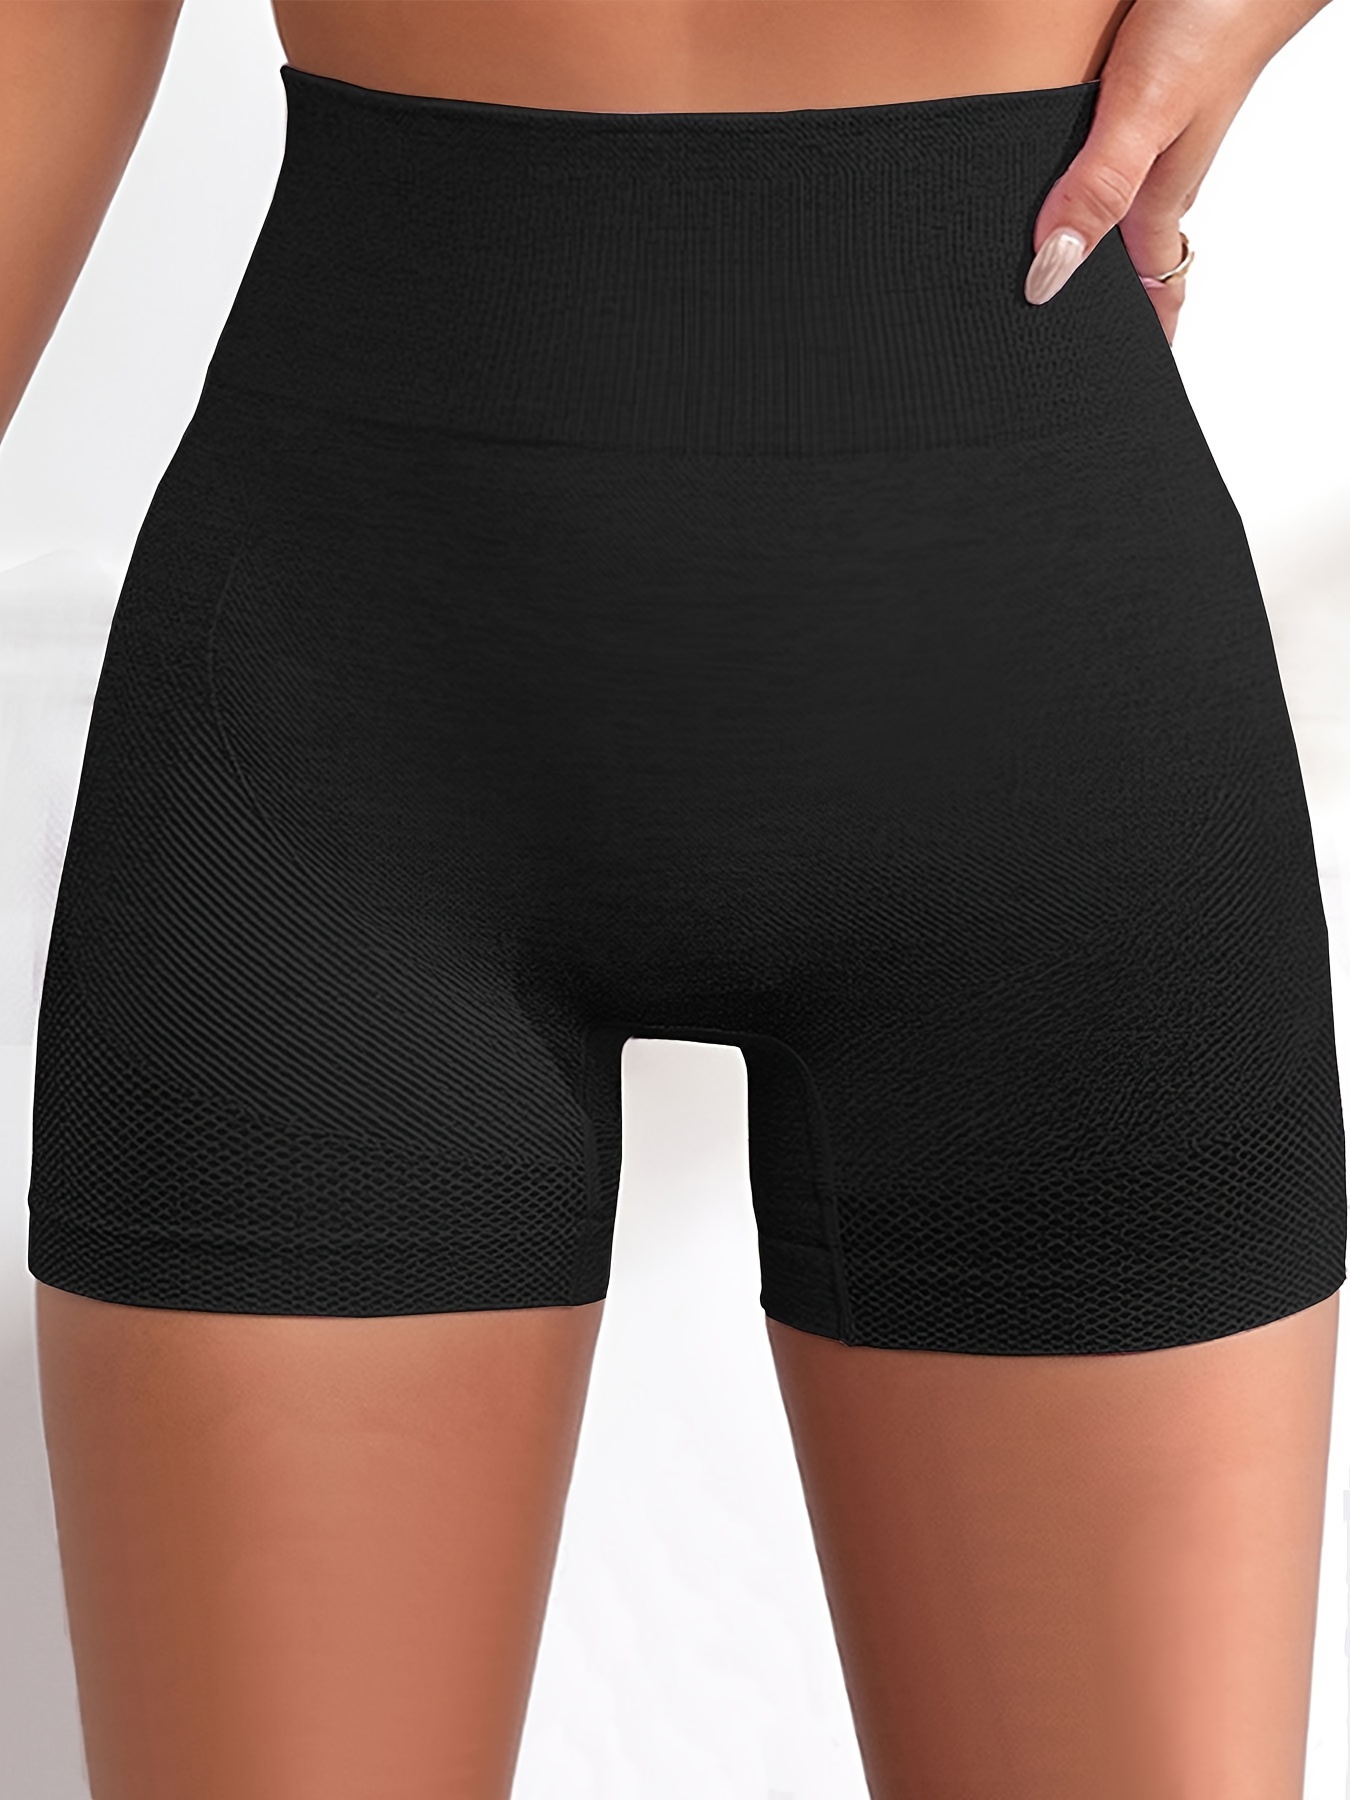  Black Spandex Shorts For Women